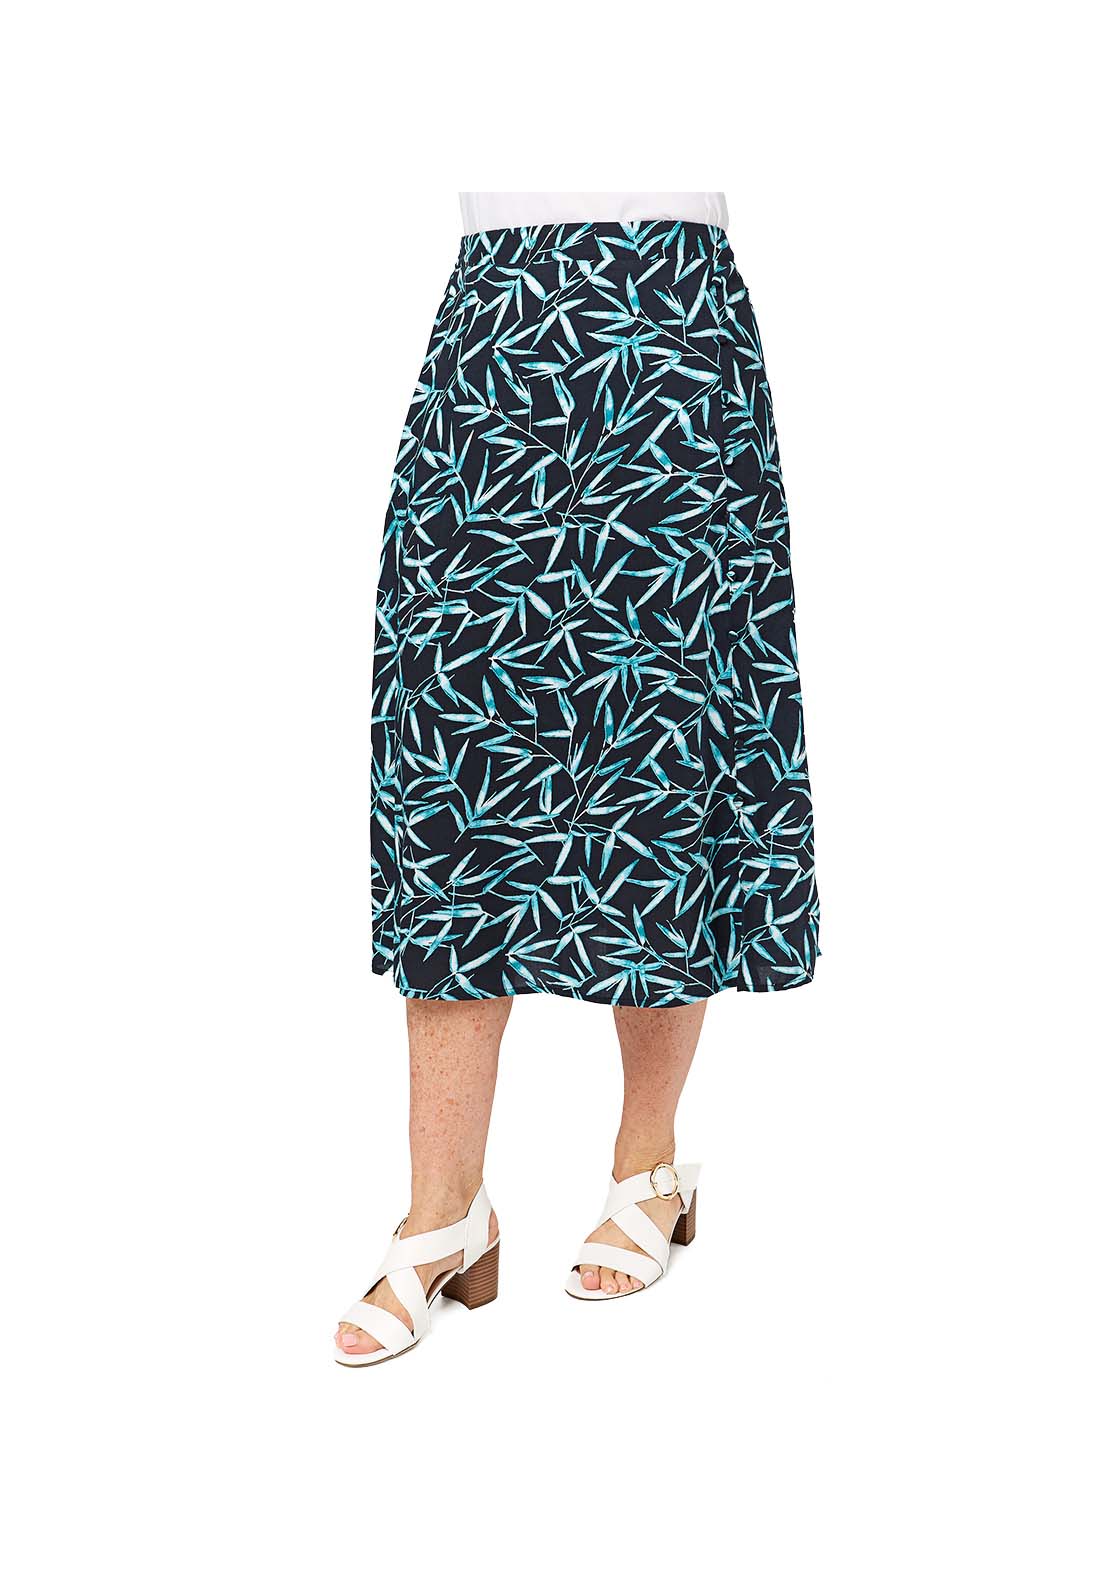 Tigiwear Turquoise Bamboo Leaf Print Skirt 3 Shaws Department Stores